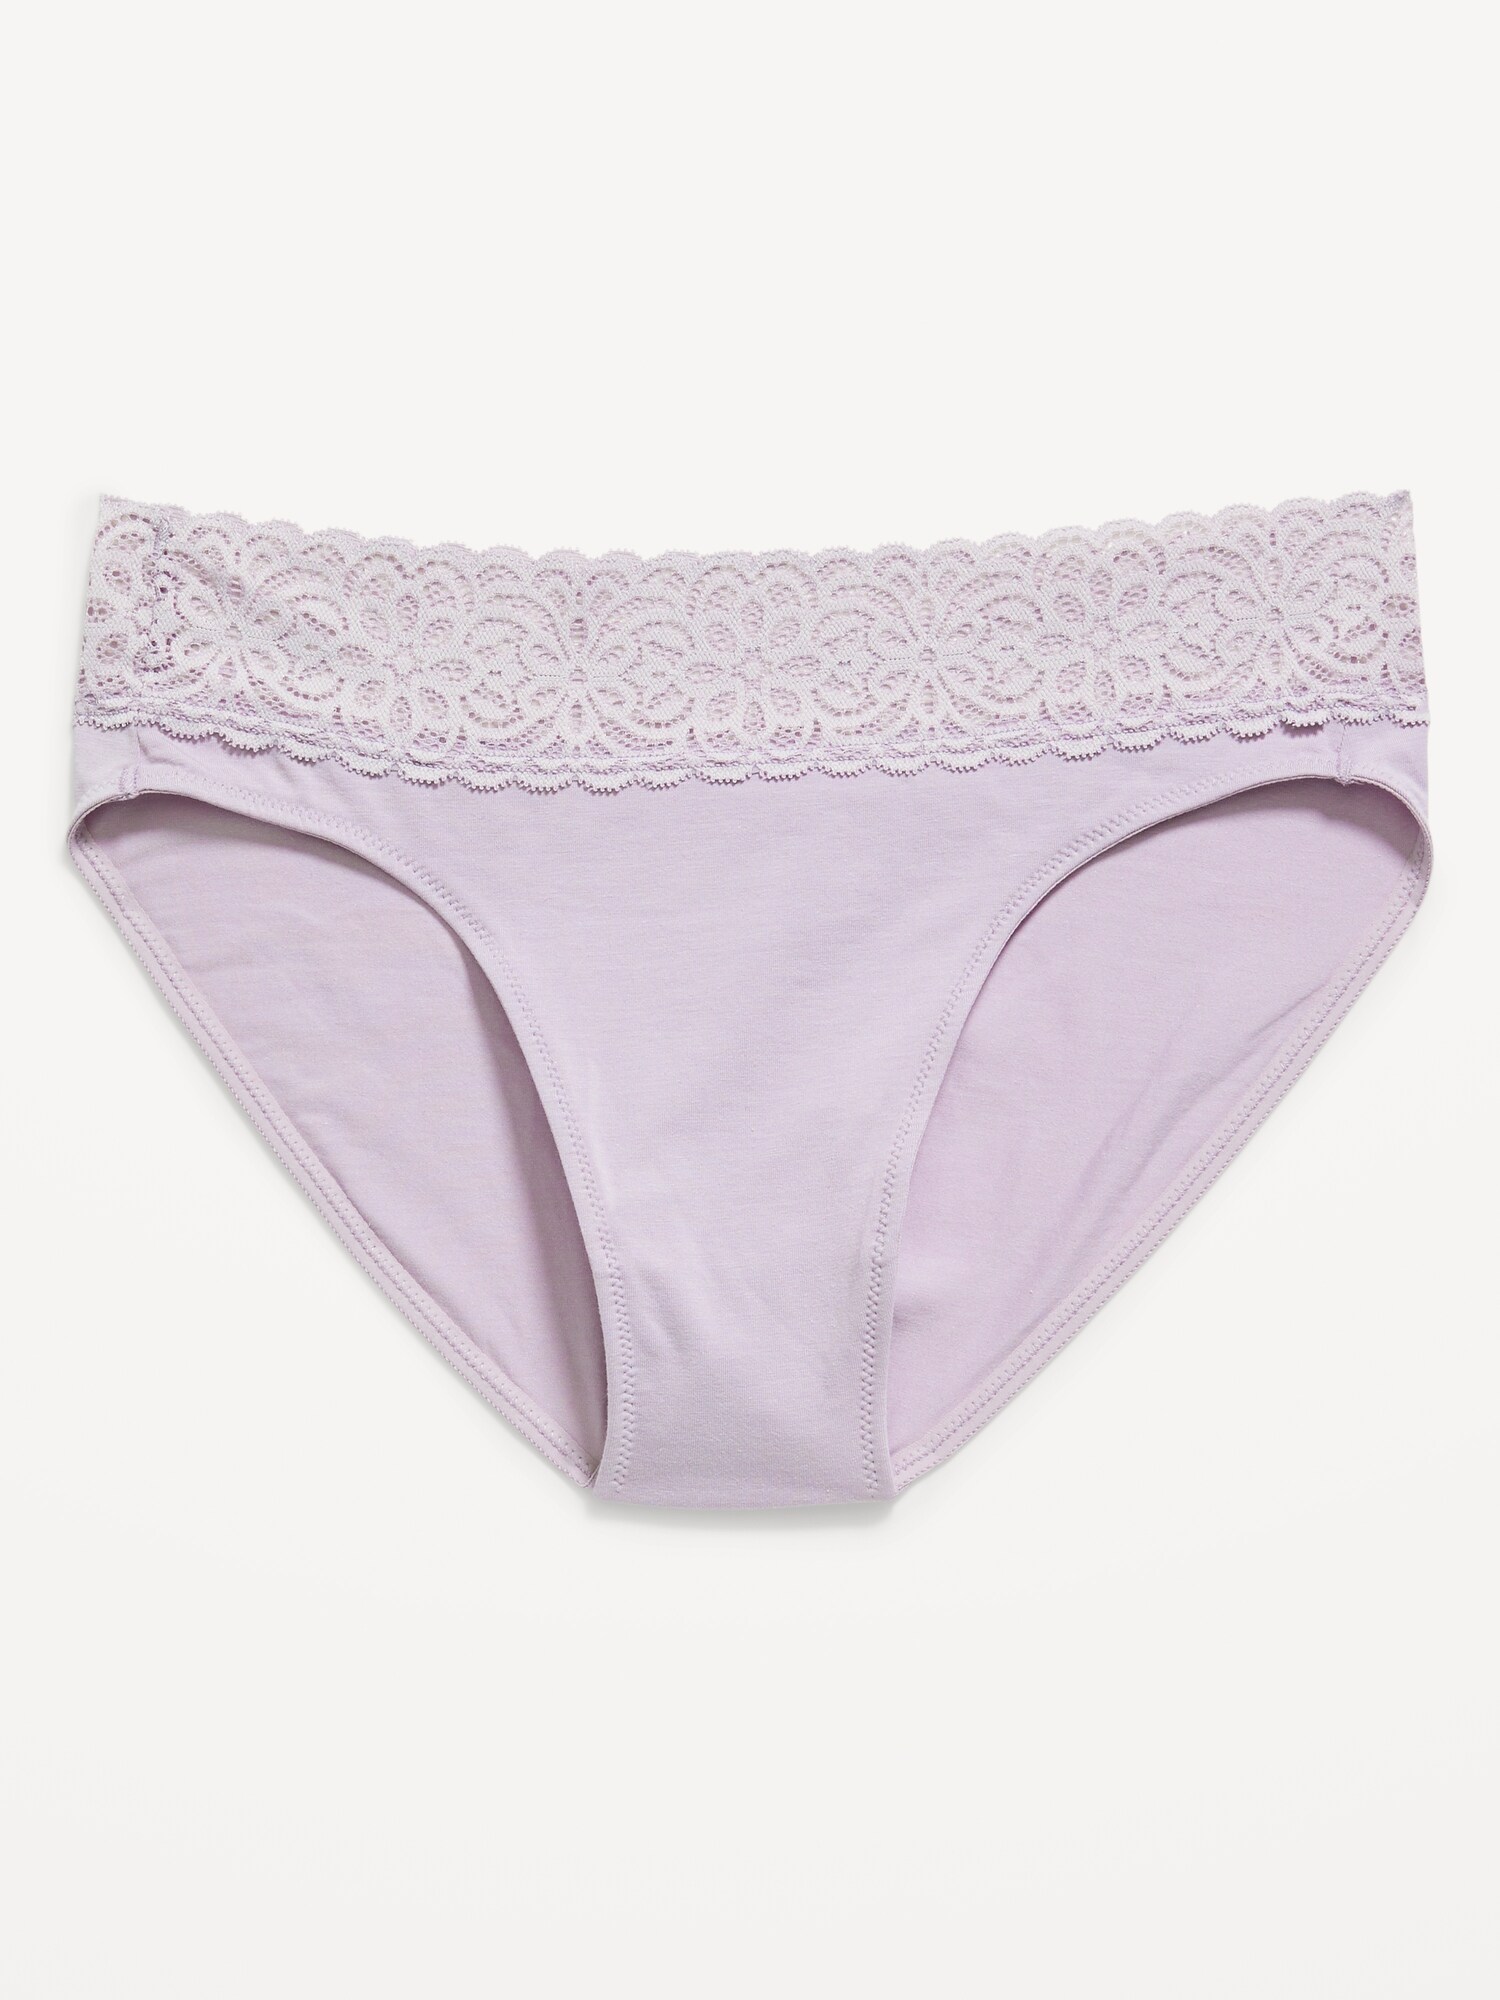 MorningSave: 8-Pack: Emprella Women's Cotton Blend Bikini Underwear